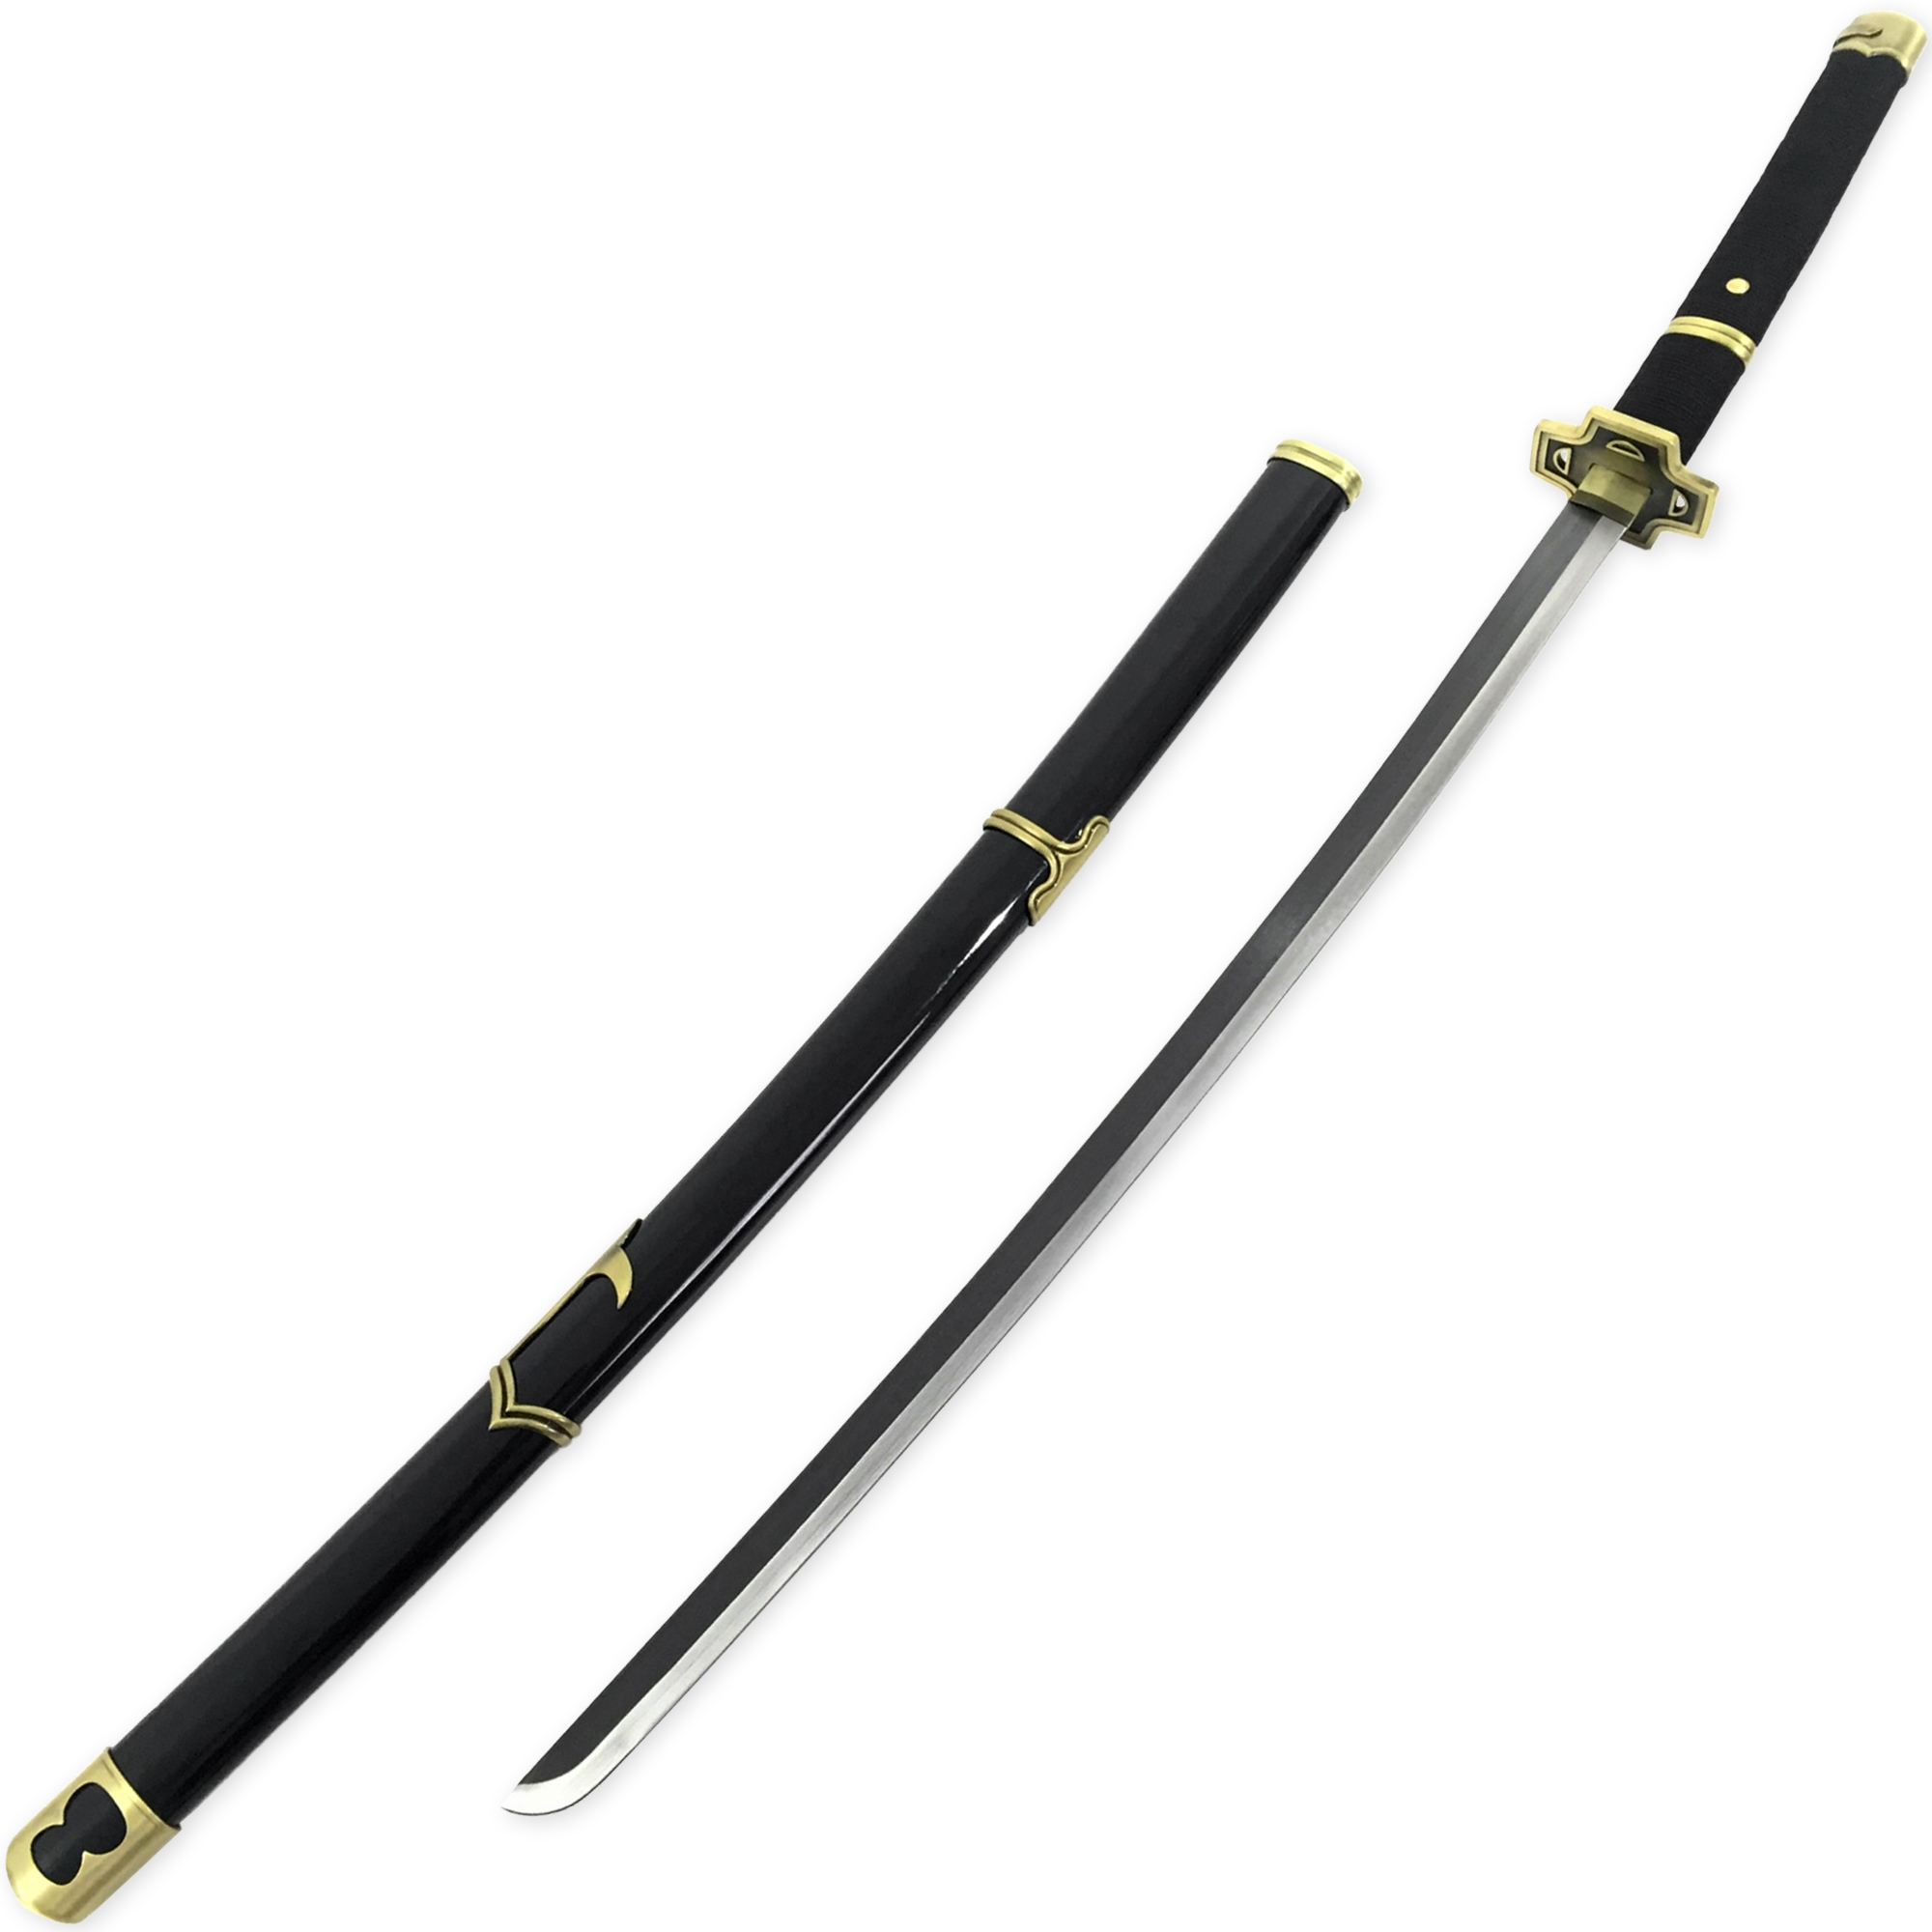 Zoro's Yubashiri Replica SWORD | Carbon Steel Blade Katana